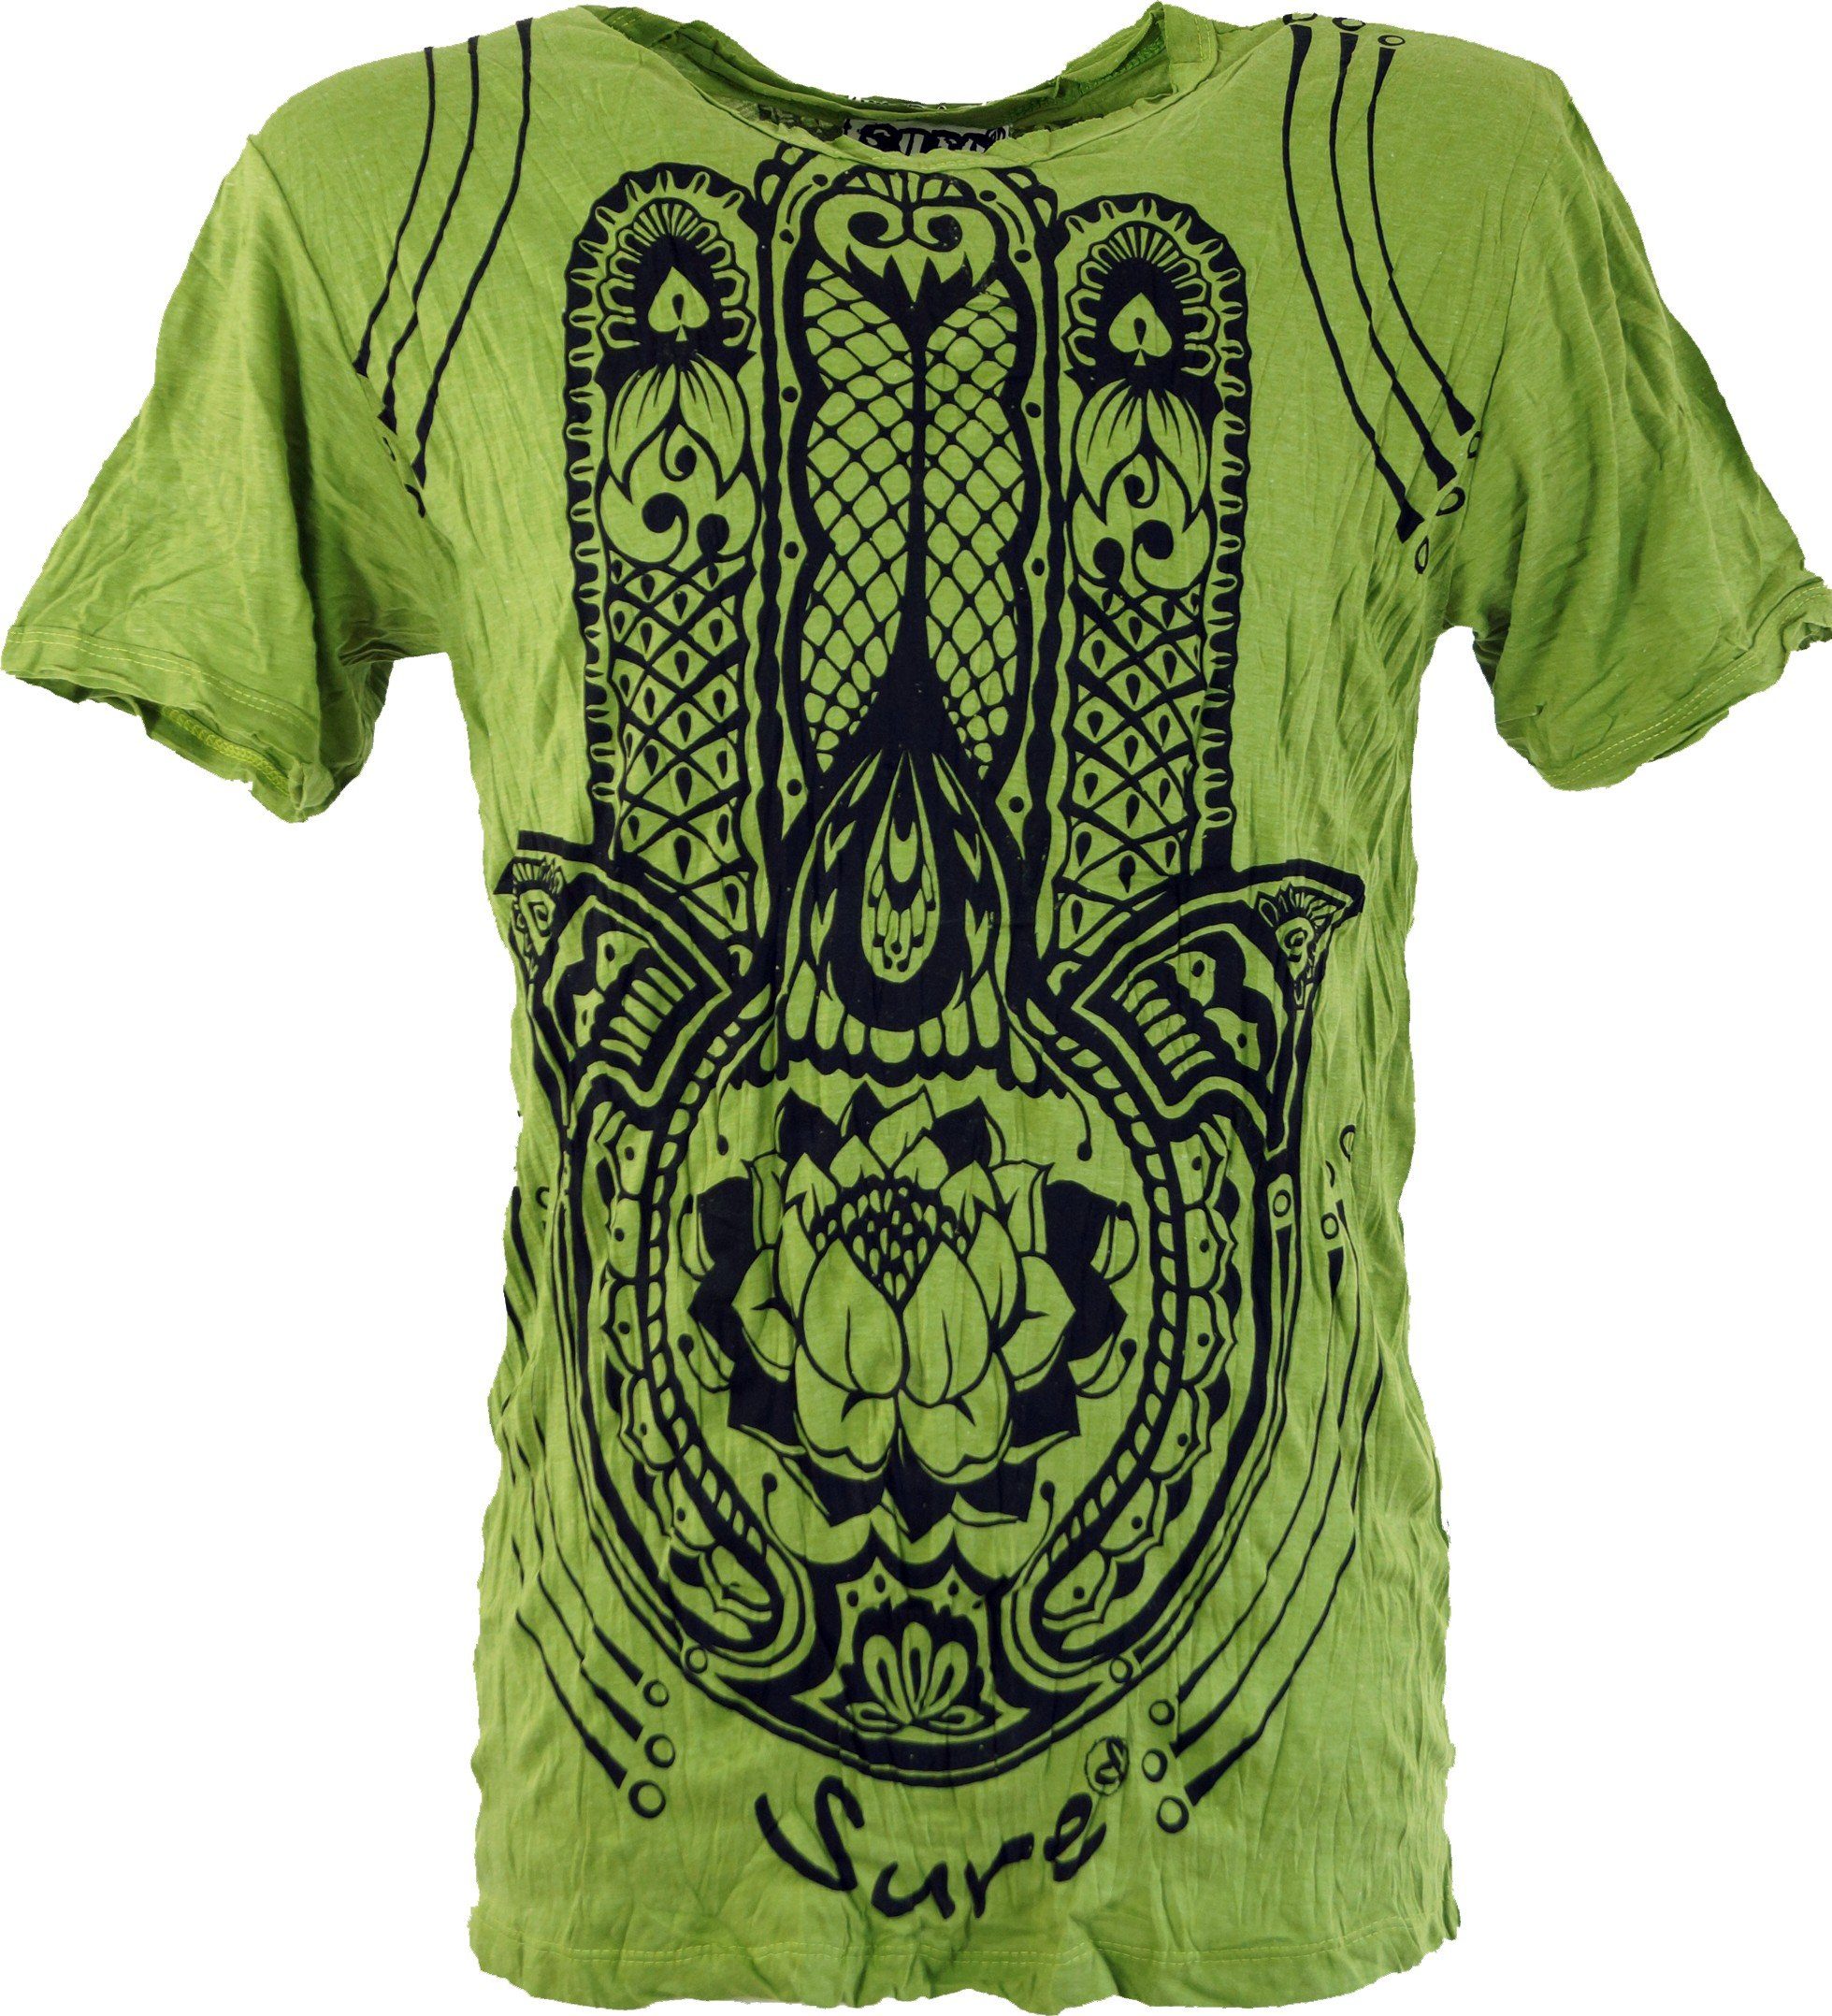 Guru-Shop T-Shirt Sure Bekleidung Goa T-Shirt alternative Style, lemon - Festival, Hand Fatimas